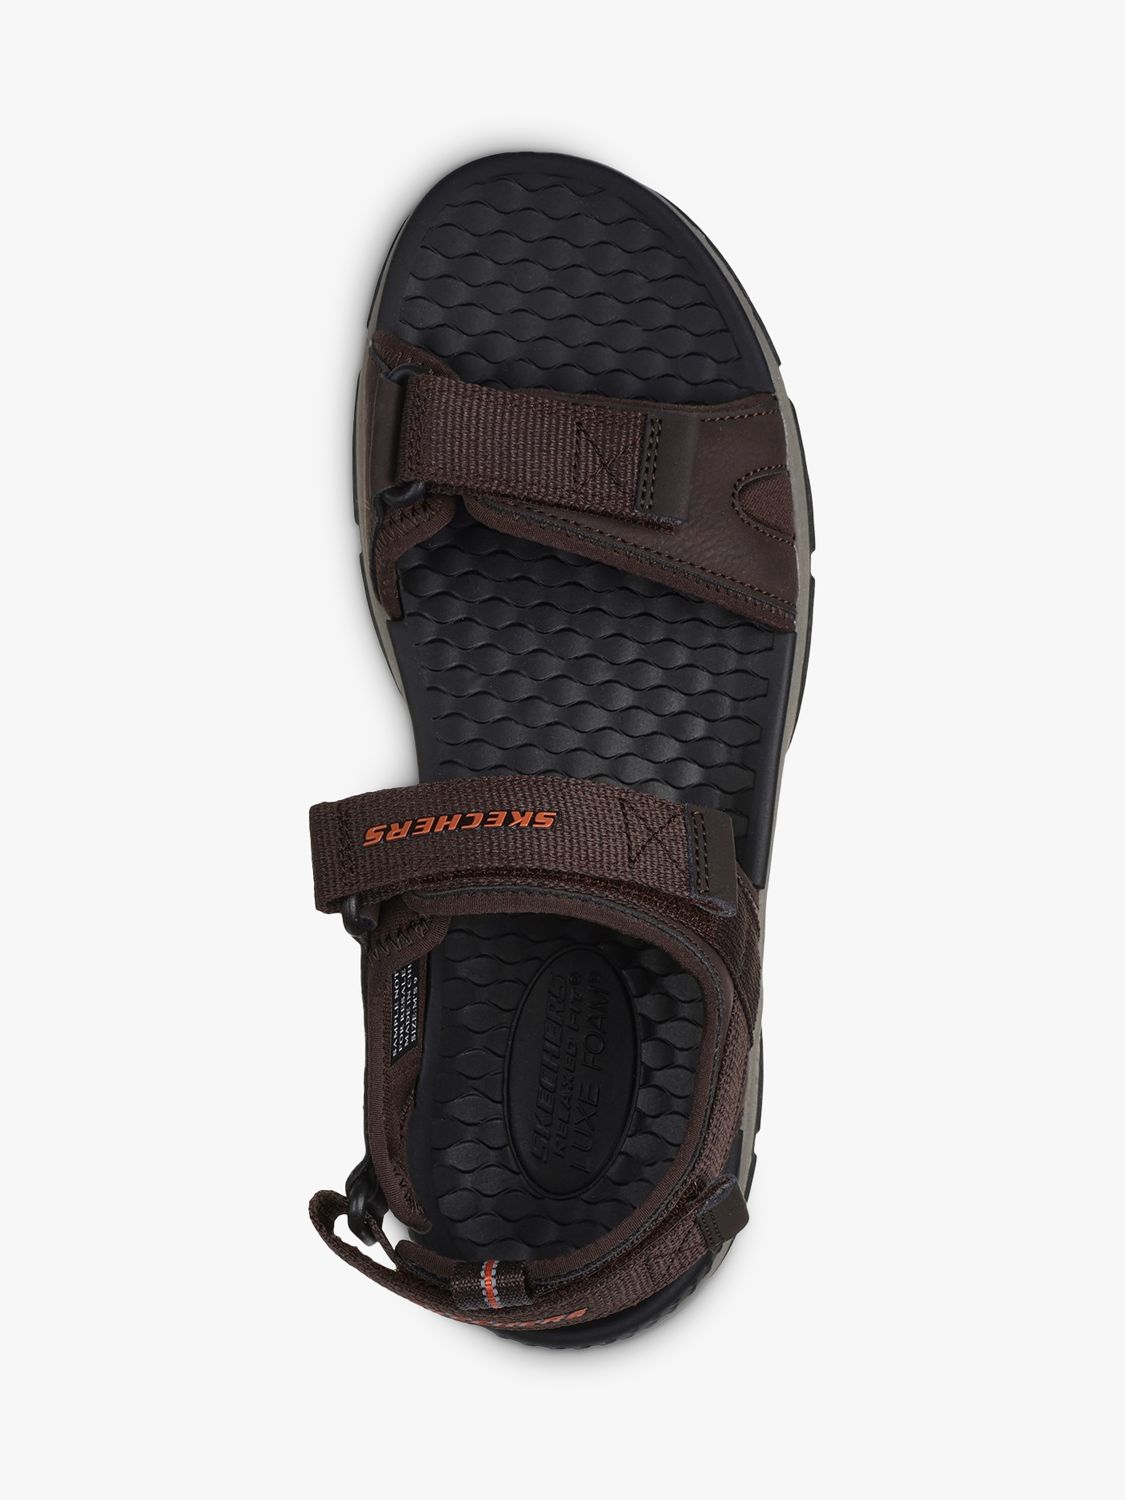 Buy Skechers Tresmen Ryer Sandals Online at johnlewis.com